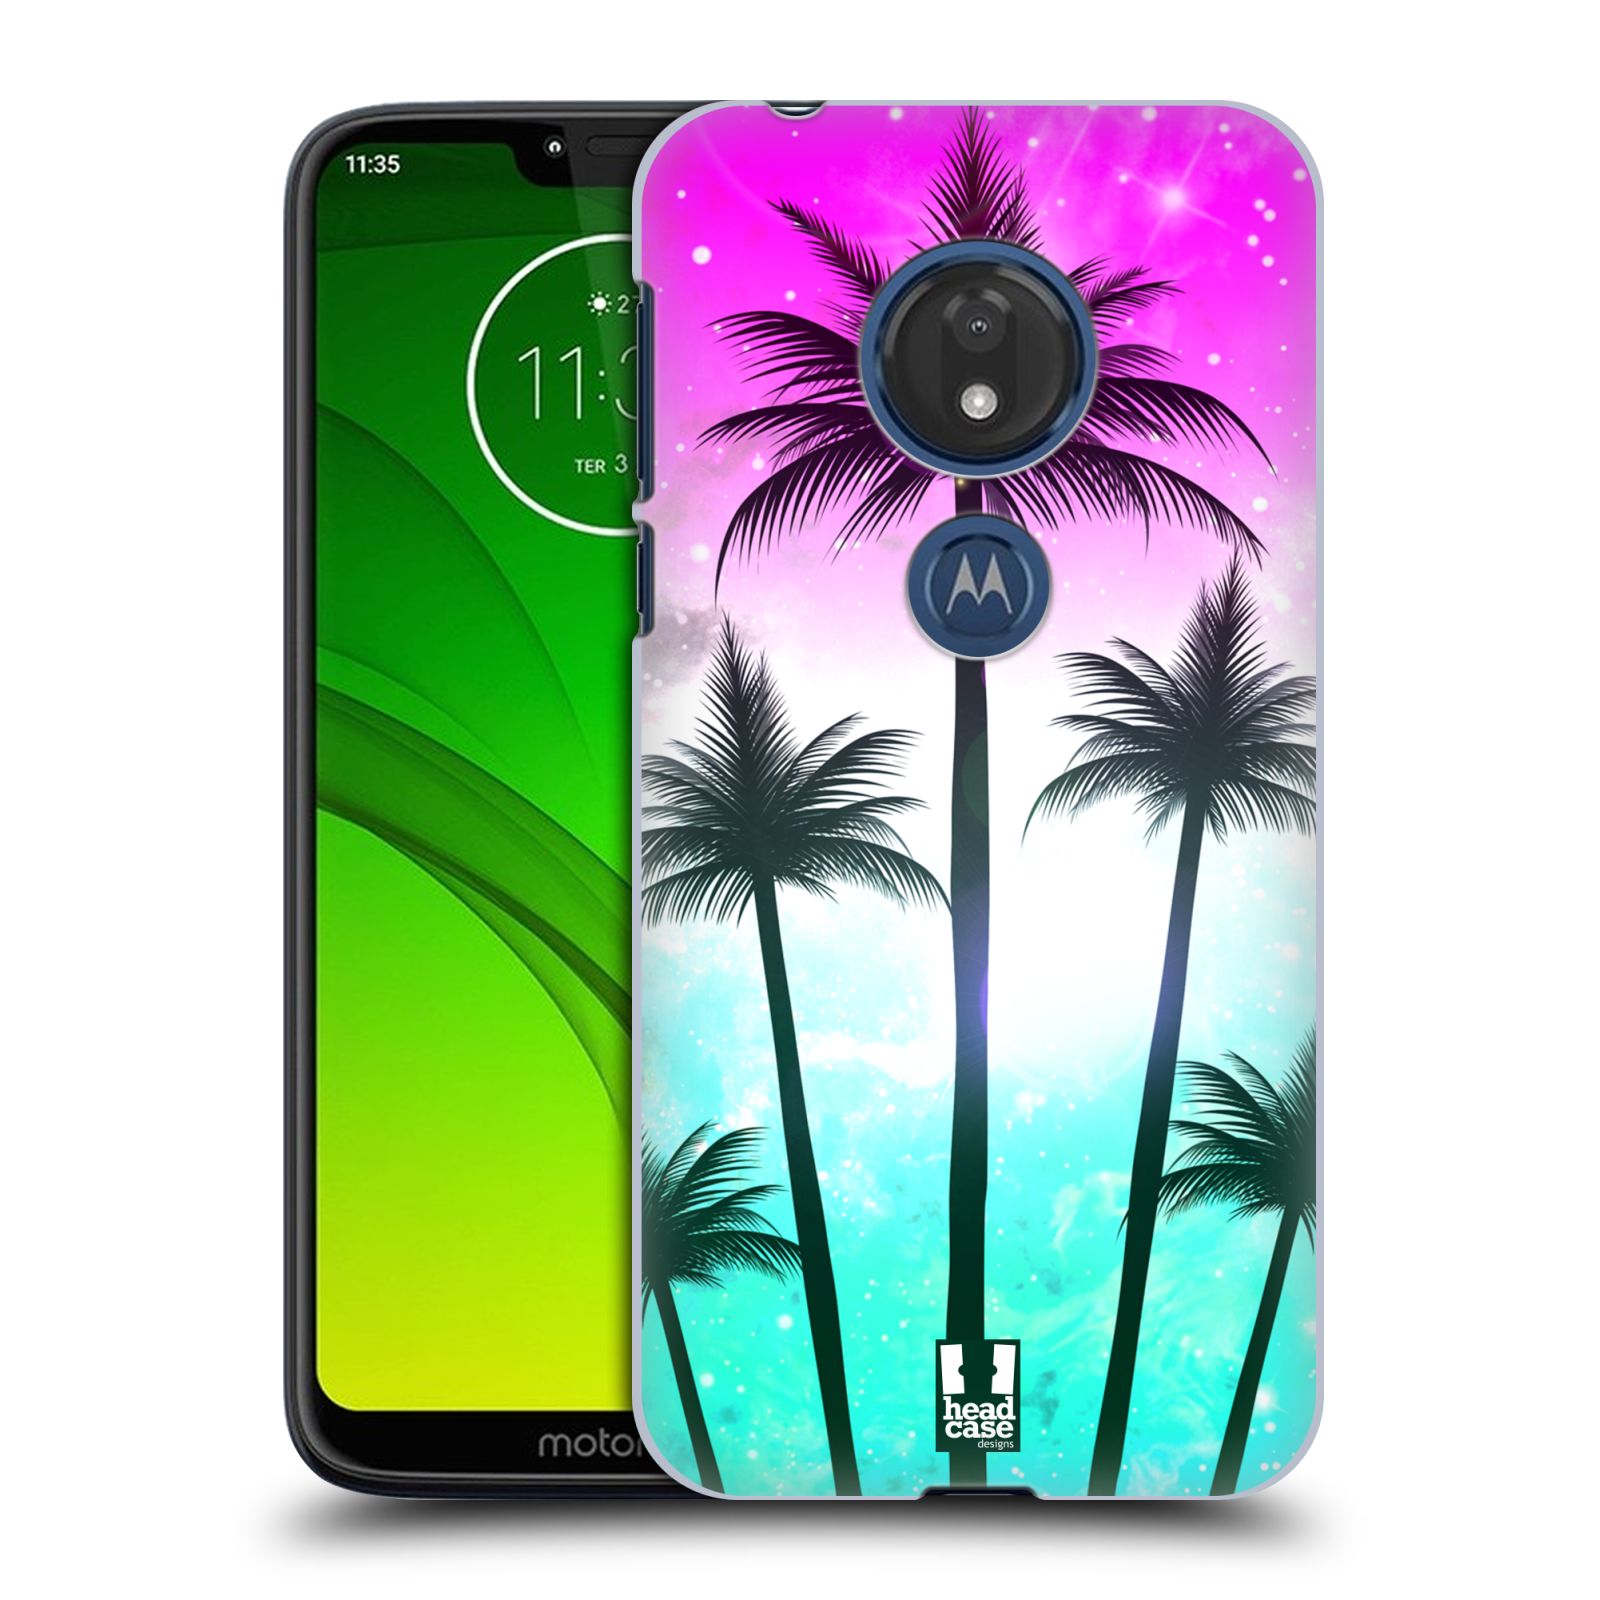 Pouzdro na mobil Motorola Moto G7 Play vzor Kreslený motiv silueta moře a palmy RŮŽOVÁ A TYRKYS